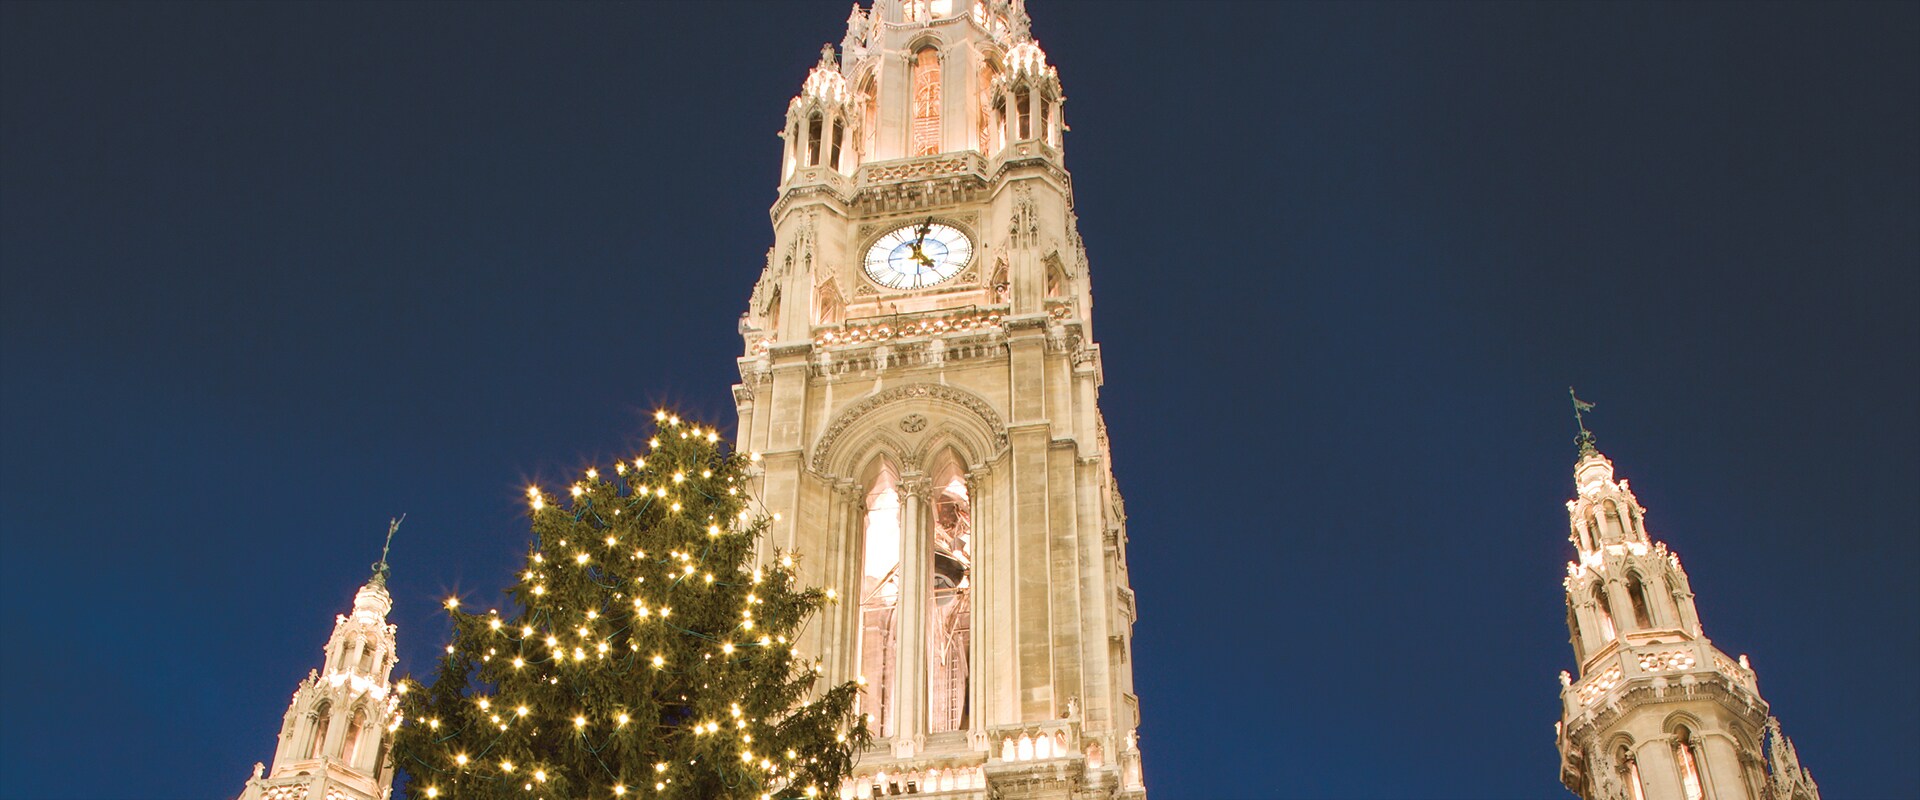 Vienna Town Hall with Christmas tree at night.